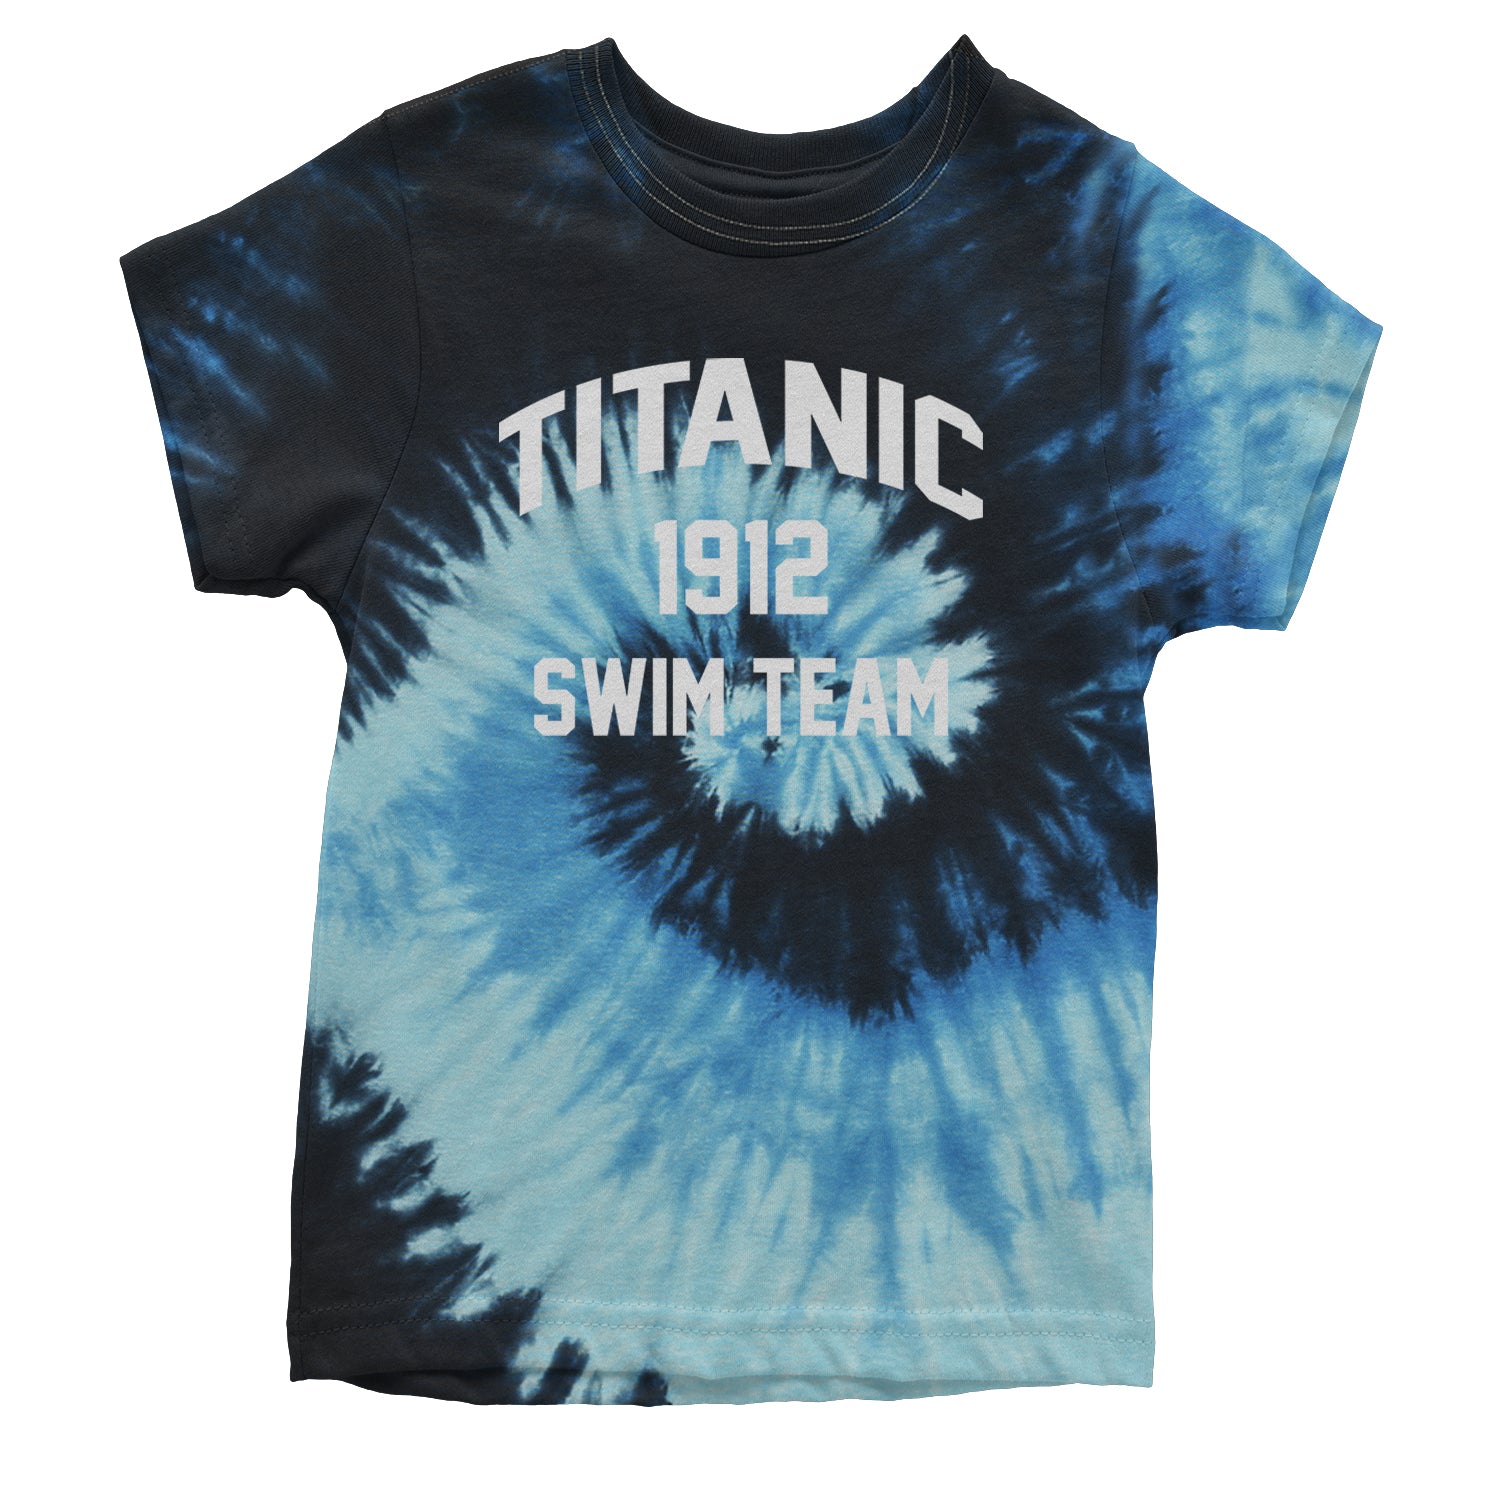 Titanic Swim Team 1912 Funny Cruise Youth T-shirt